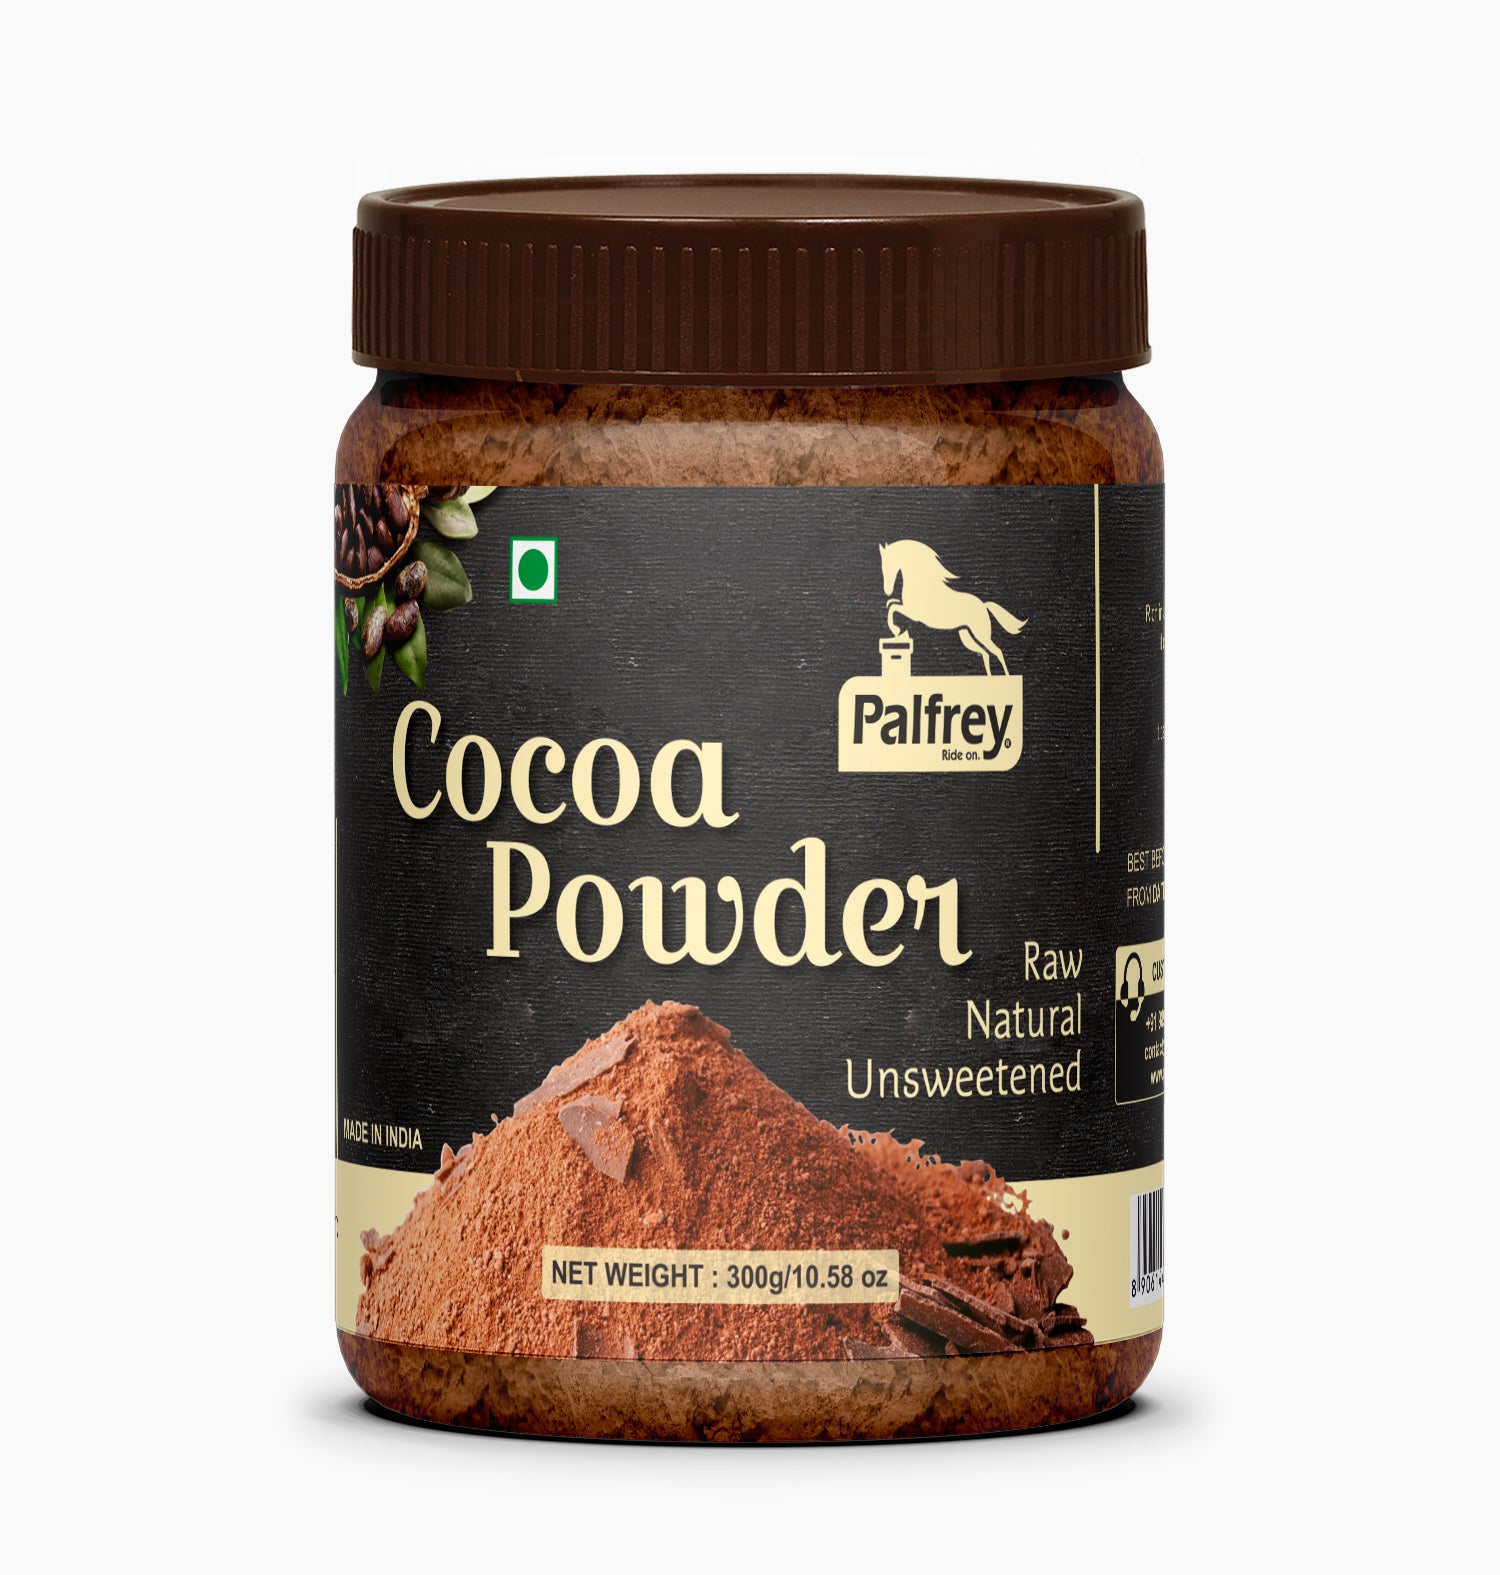 coco powder